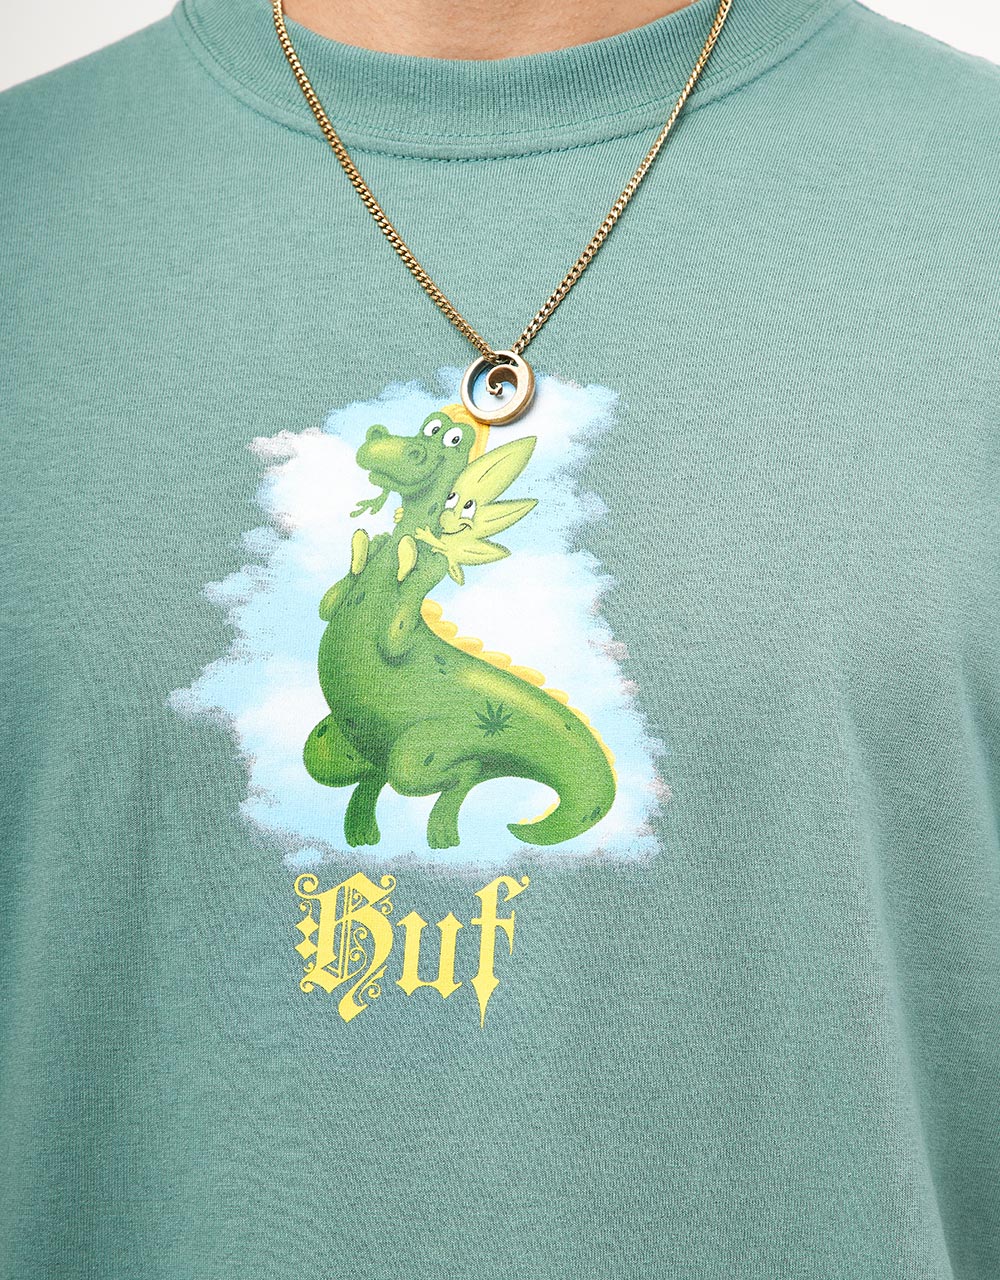 HUF Fairy Tale T-Shirt - Sage